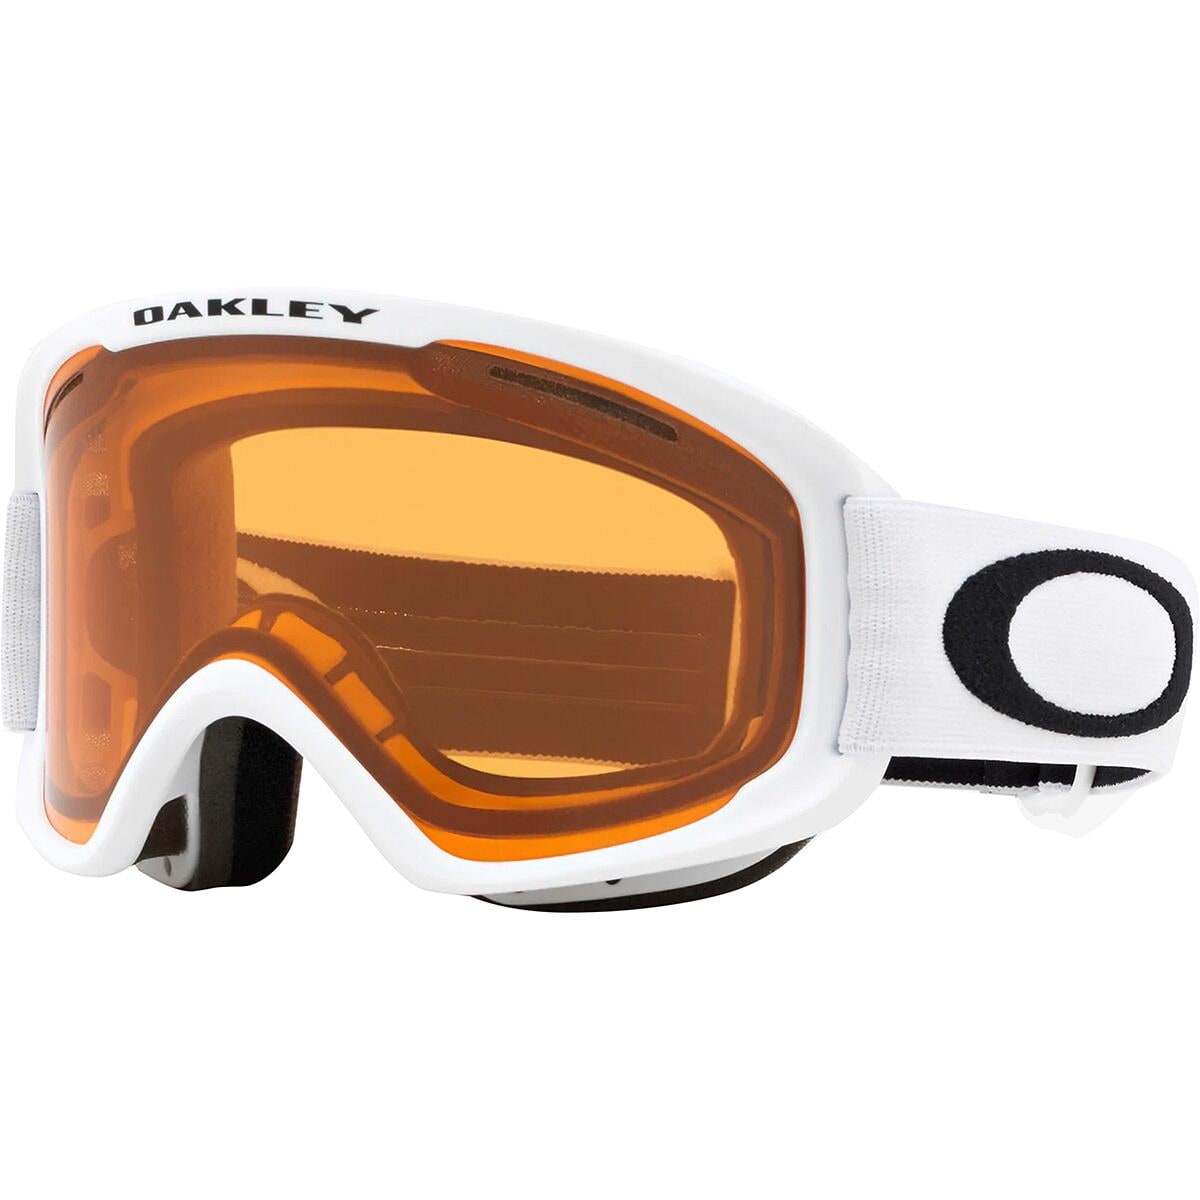 Photos - Ski Goggles Oakley O Frame 2.0 Pro M Goggles 